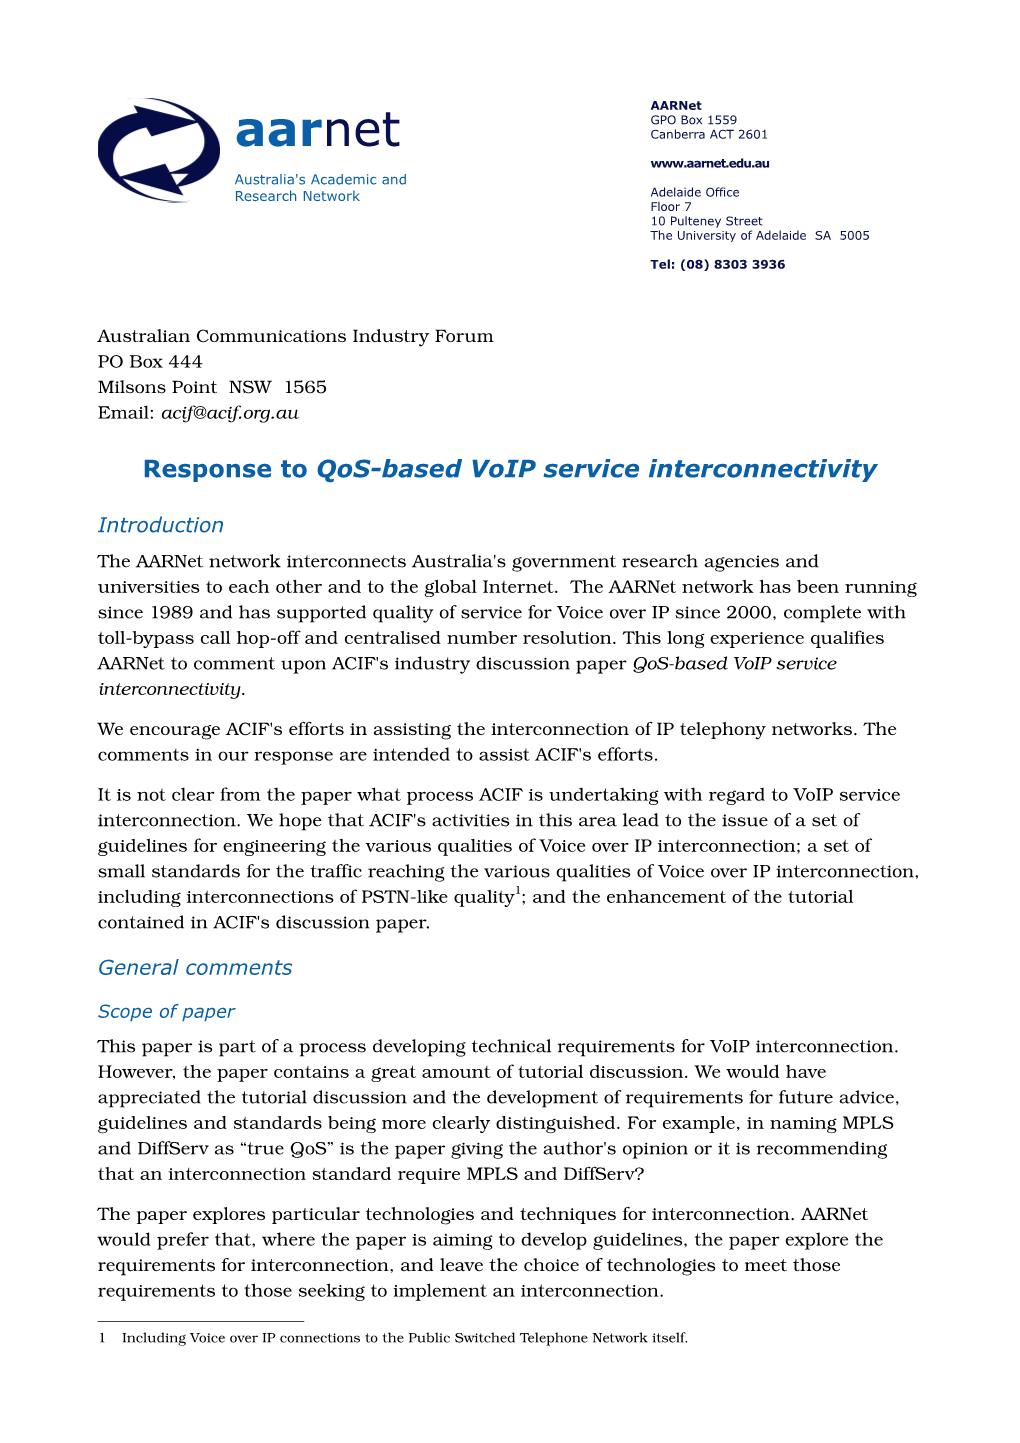 Response to ACIF Qos-Based Voip Service Interconnectivity